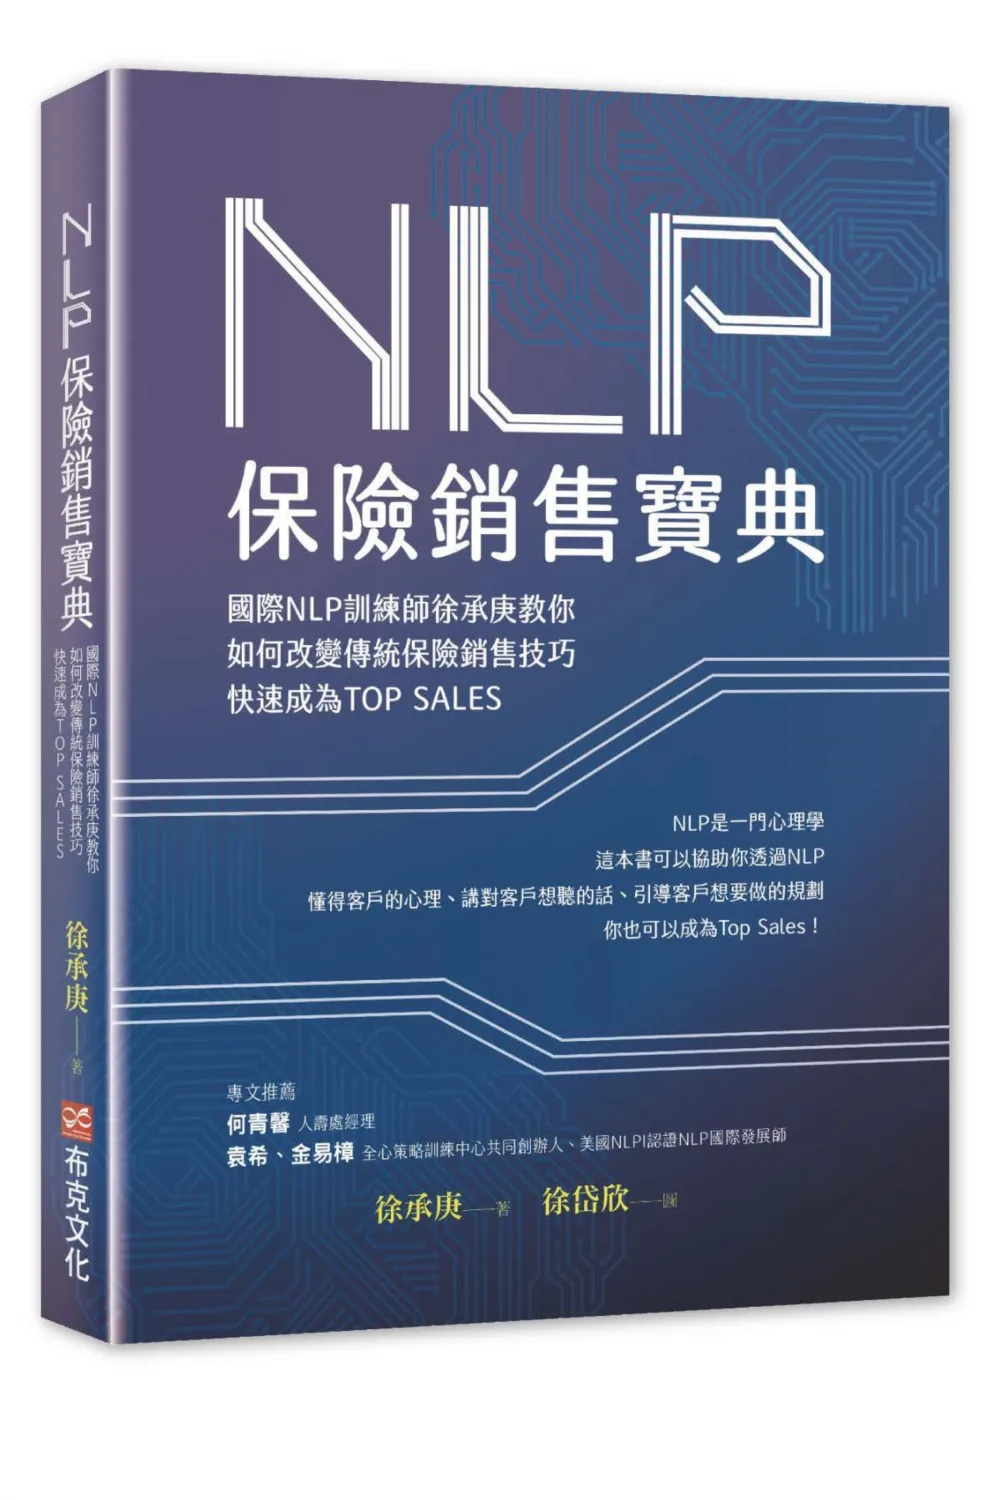 NLP保險銷售寶典：國際NLP訓練師徐承庚教你如何改變傳統保險銷售技巧，快速成為TOP